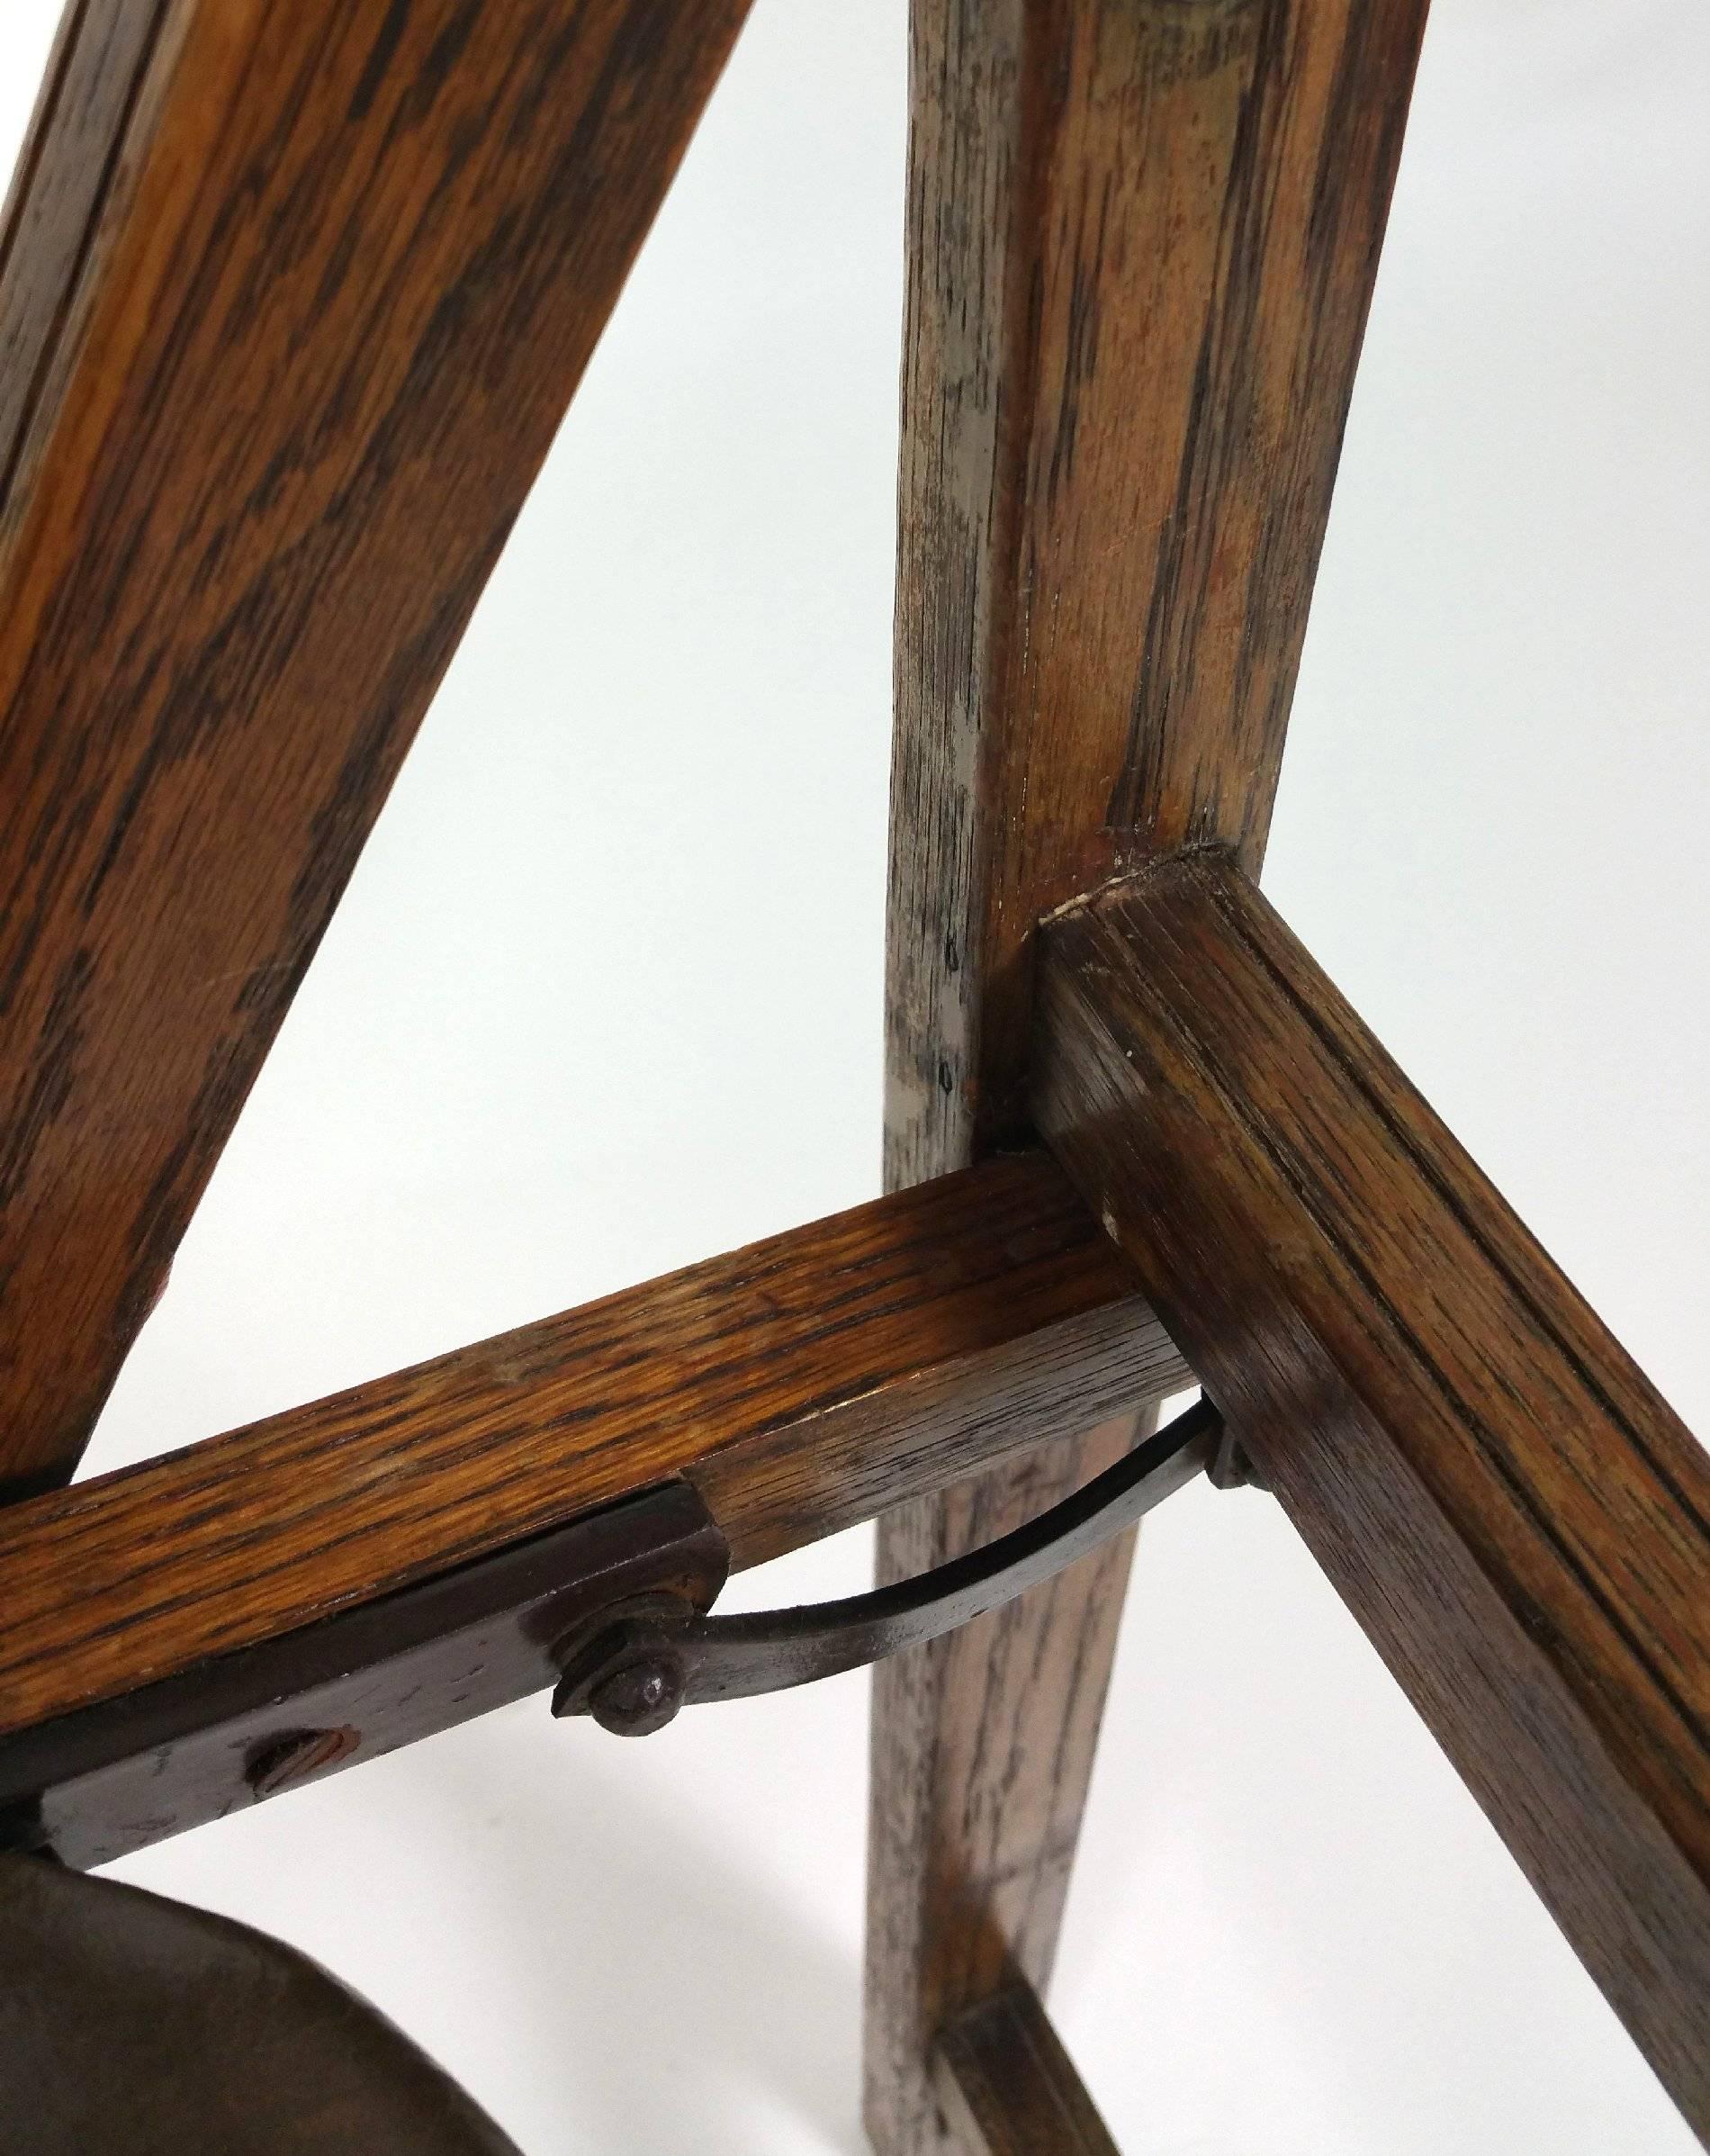 English Pair of Edwardian Oak and Leather ‘Tansad’ Folding Chairs